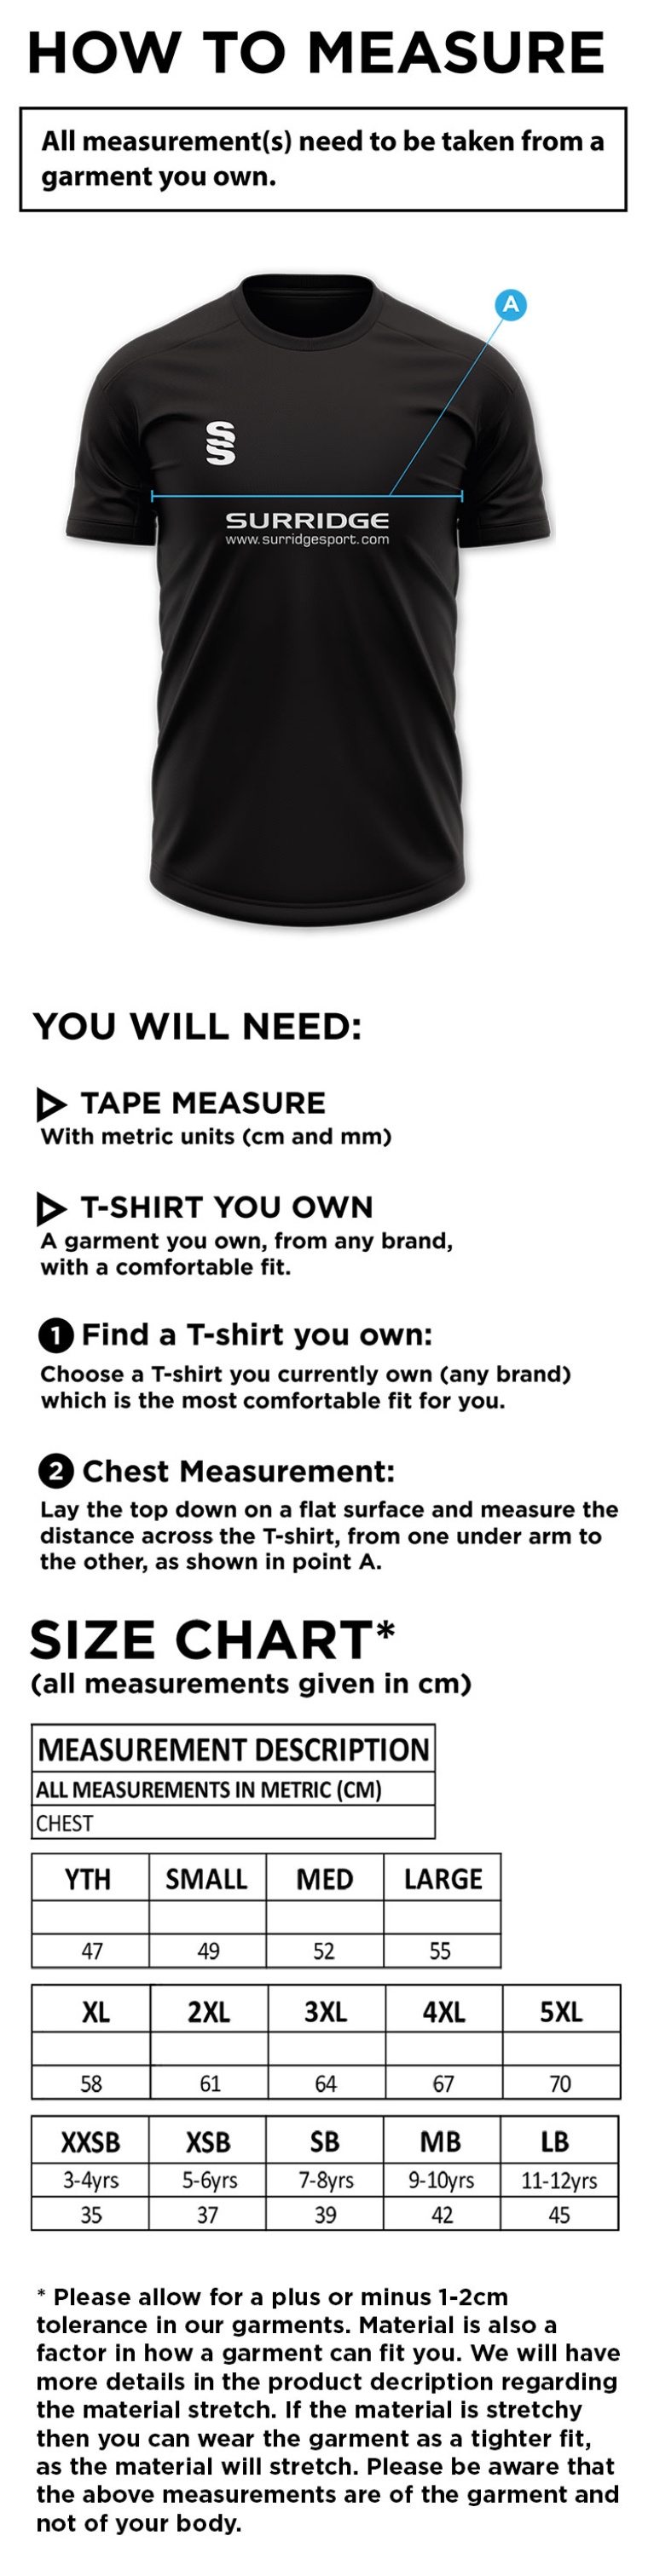 Blade Polo Shirt : Navy / Emerald / White - Size Guide